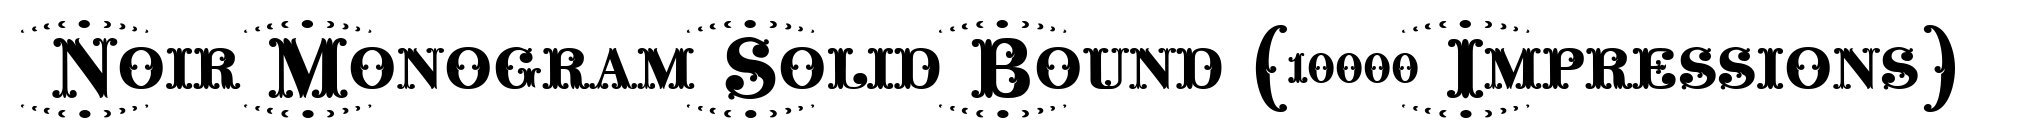 Noir Monogram Solid Bound (10000 Impressions) image